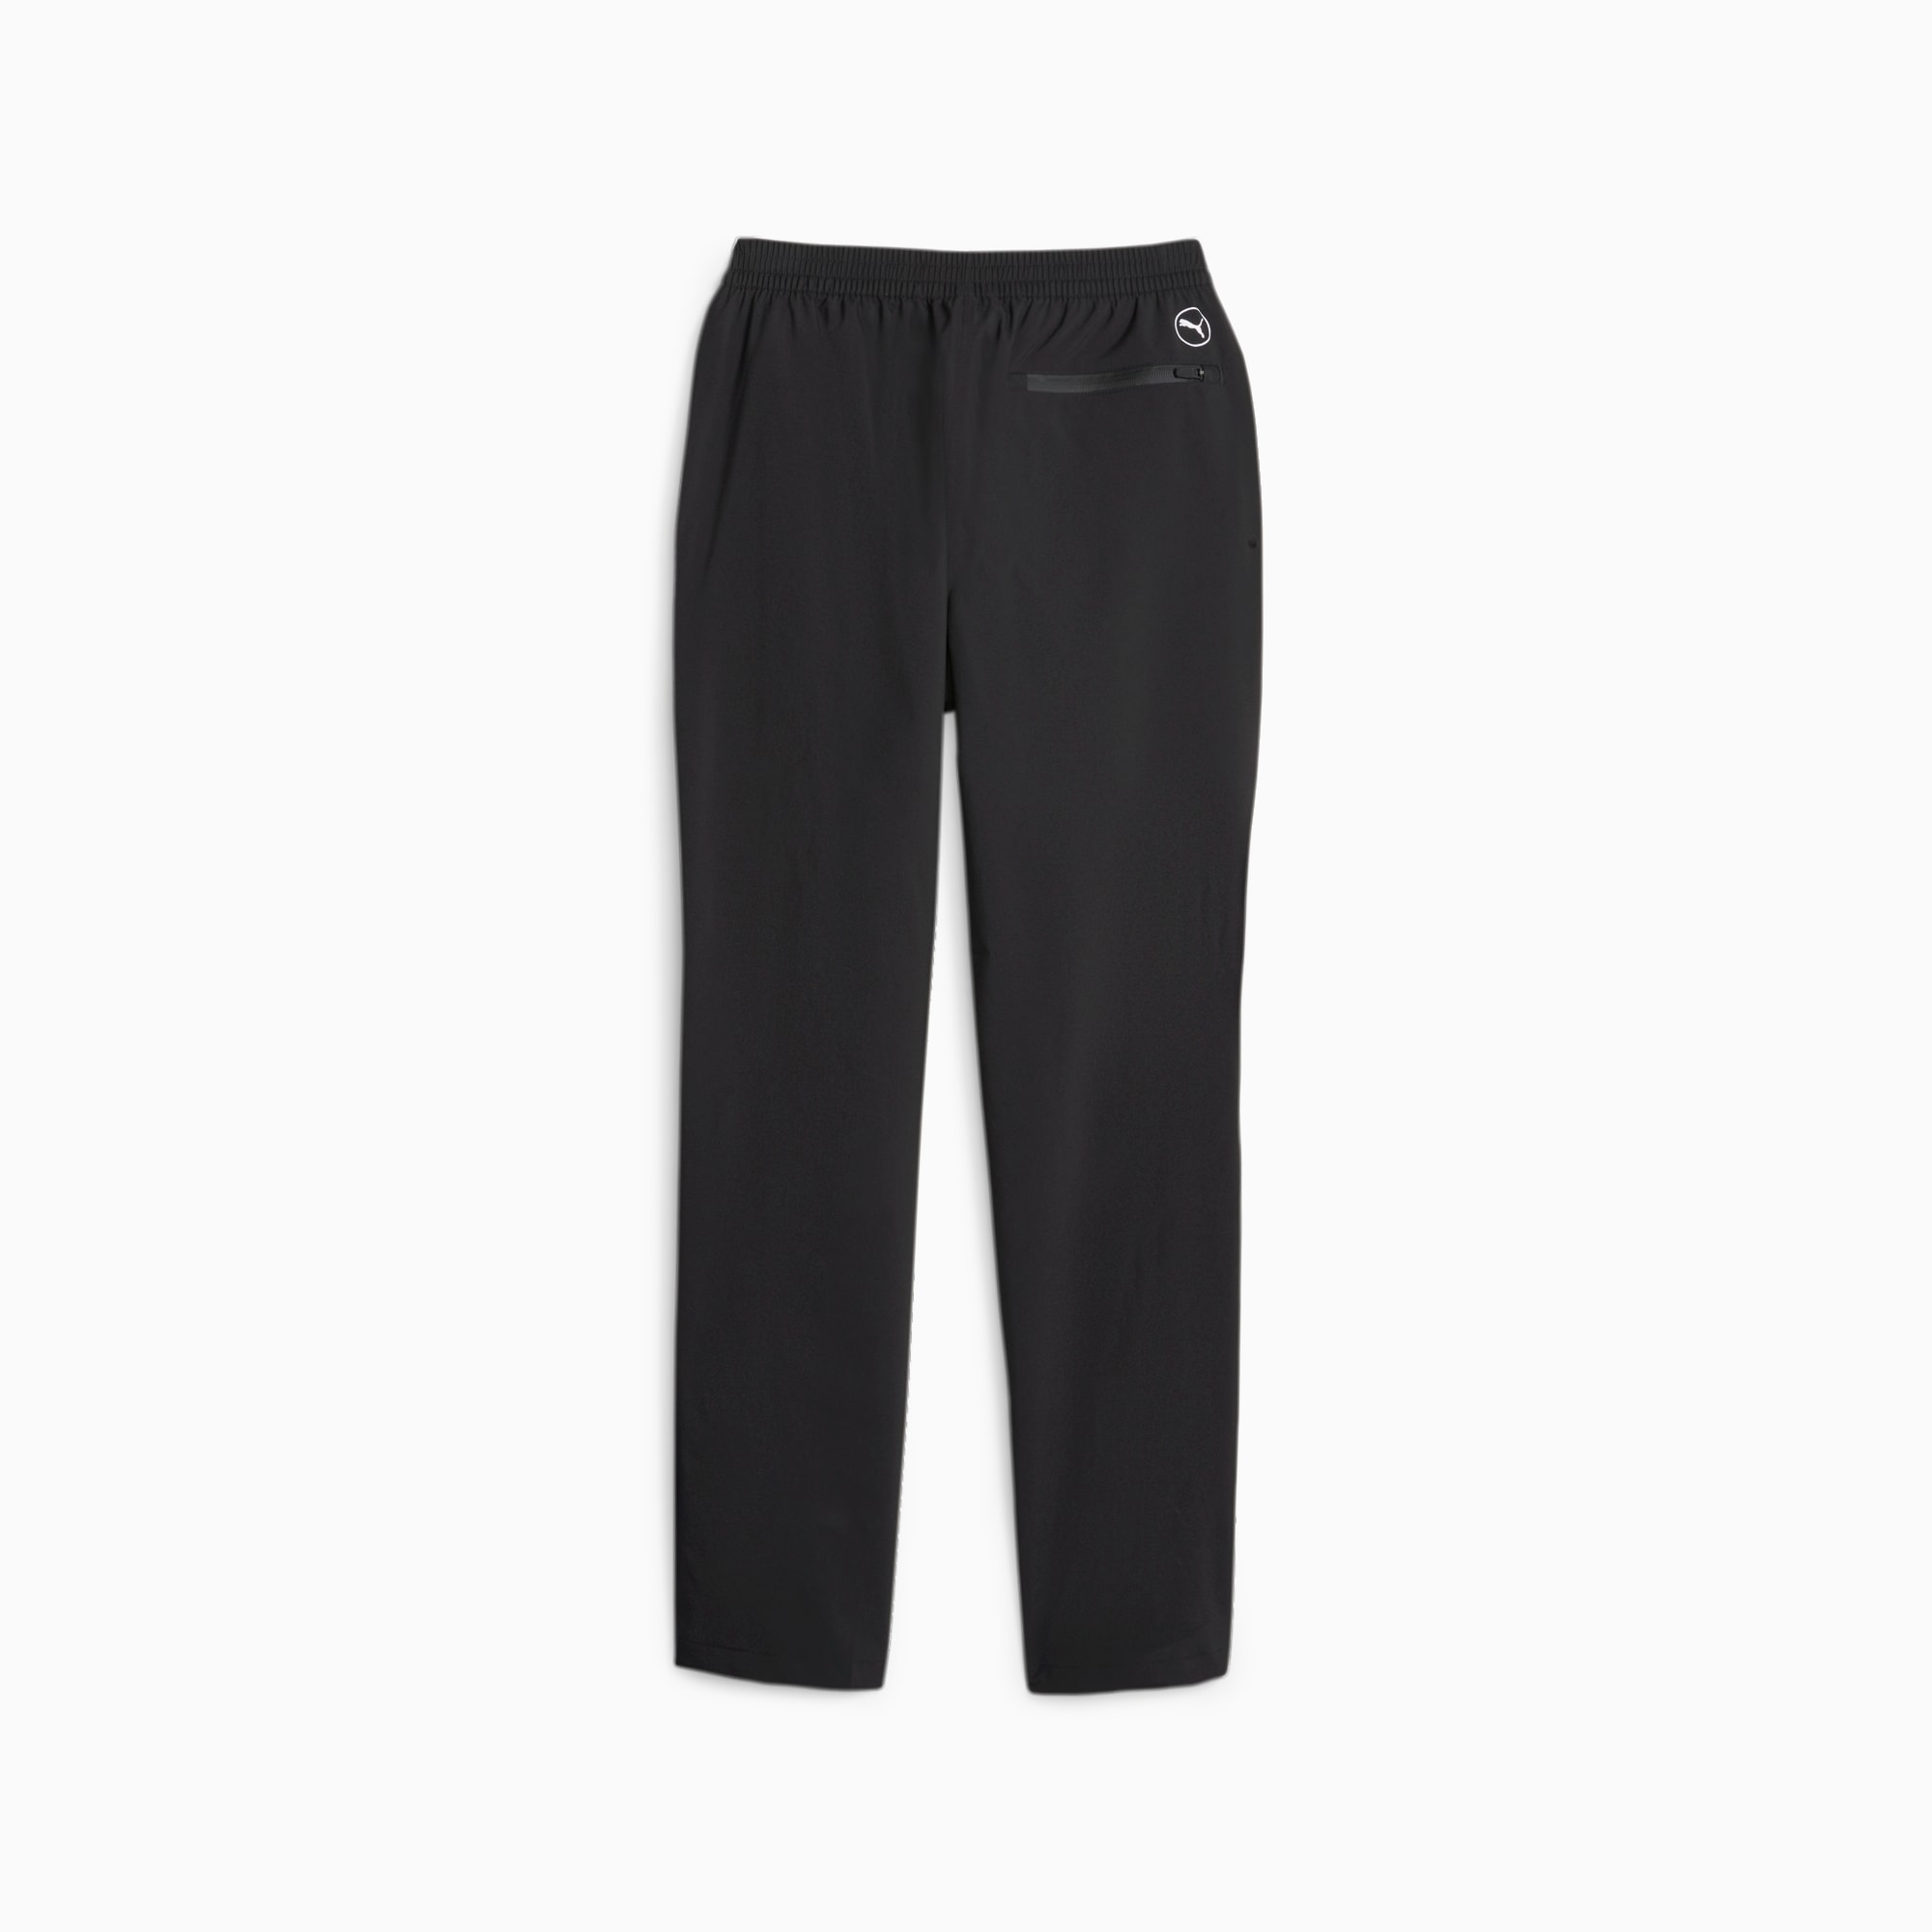 PUMA Drylbl Men's Rain Pants, Black, Size M/L, Clothing